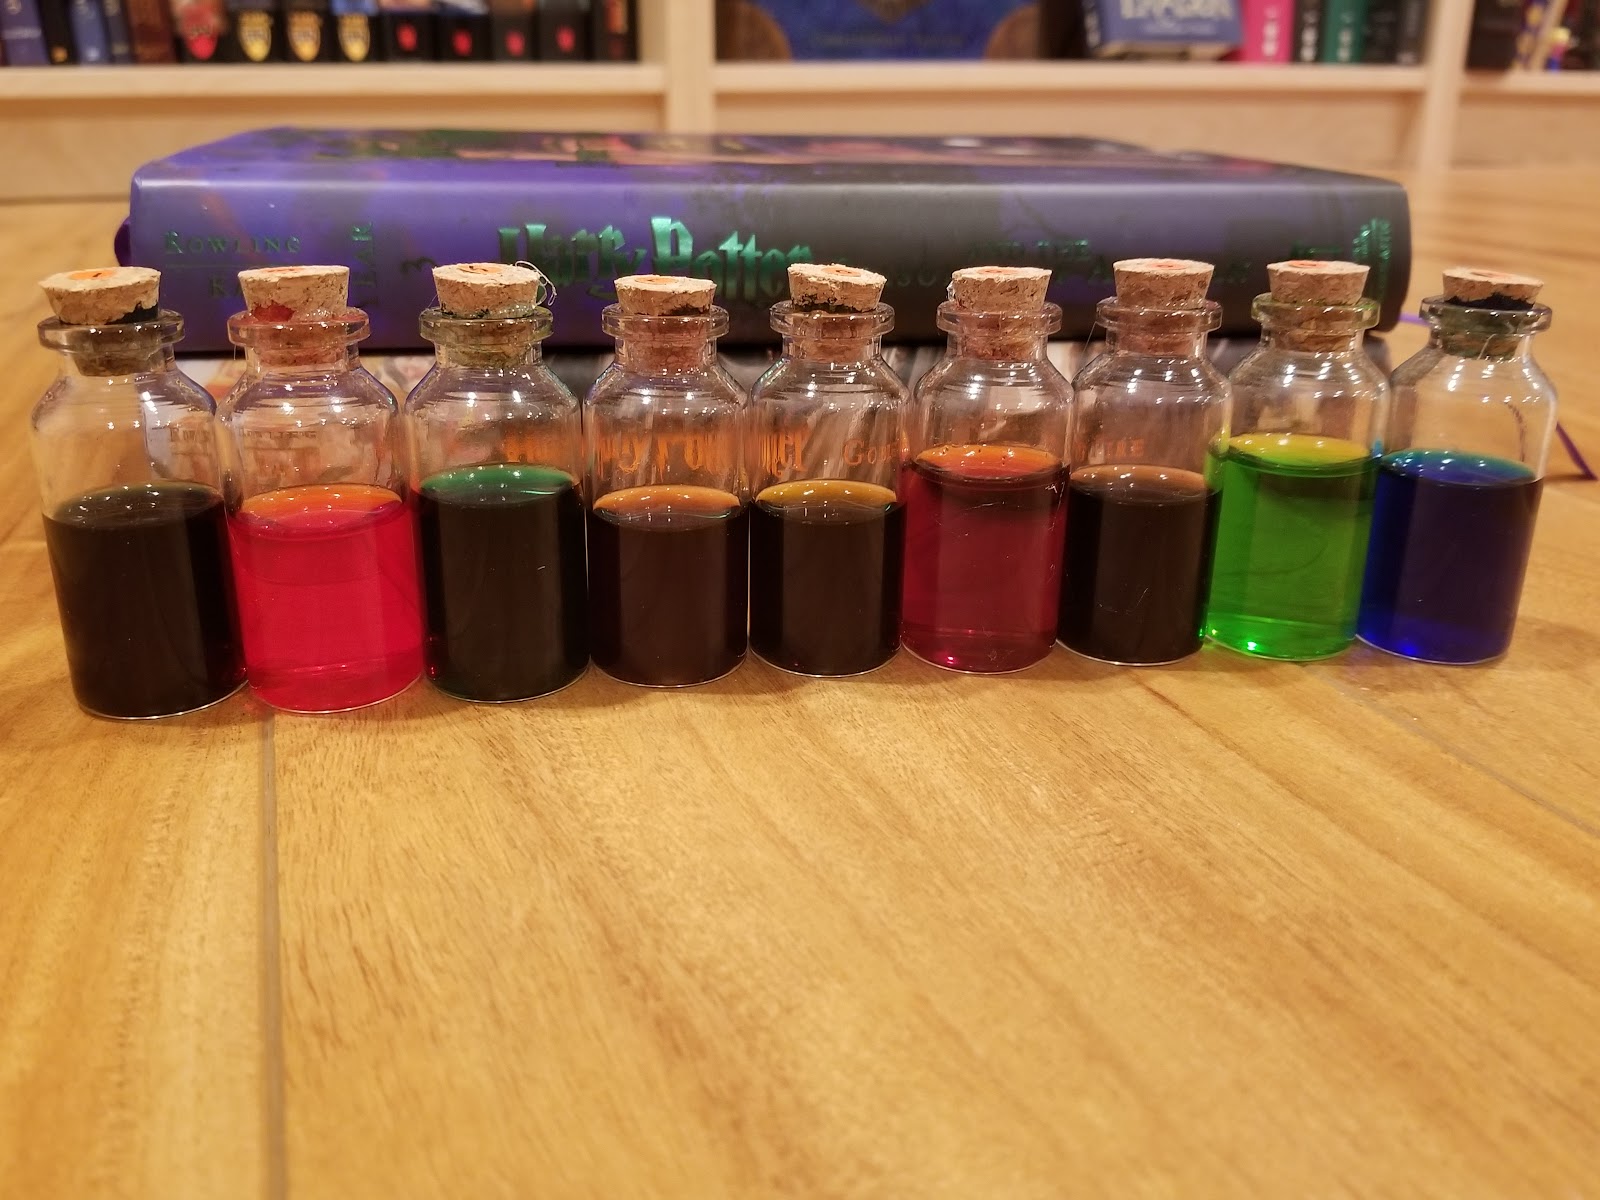 Harry Potter Potions in bottles